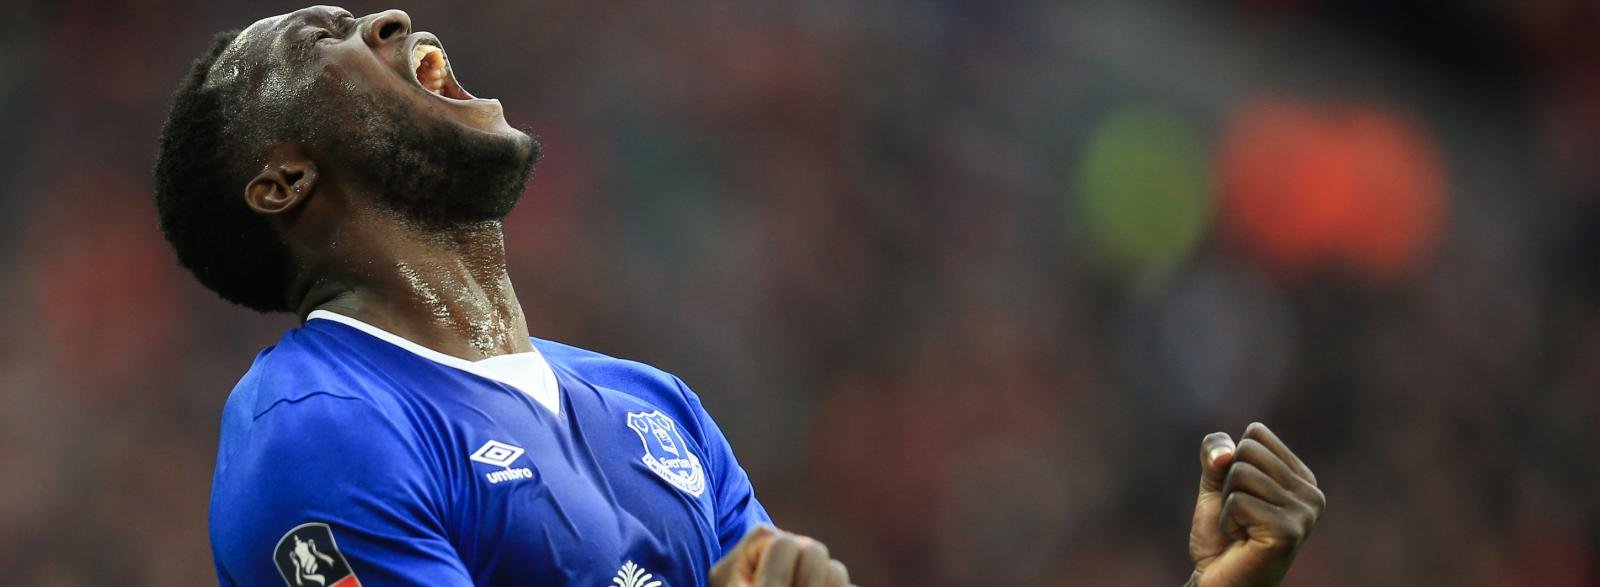 Premier League Round-Up: Everton’s Lukaku blitzes Sunderland, Manchester City win Manchester derby